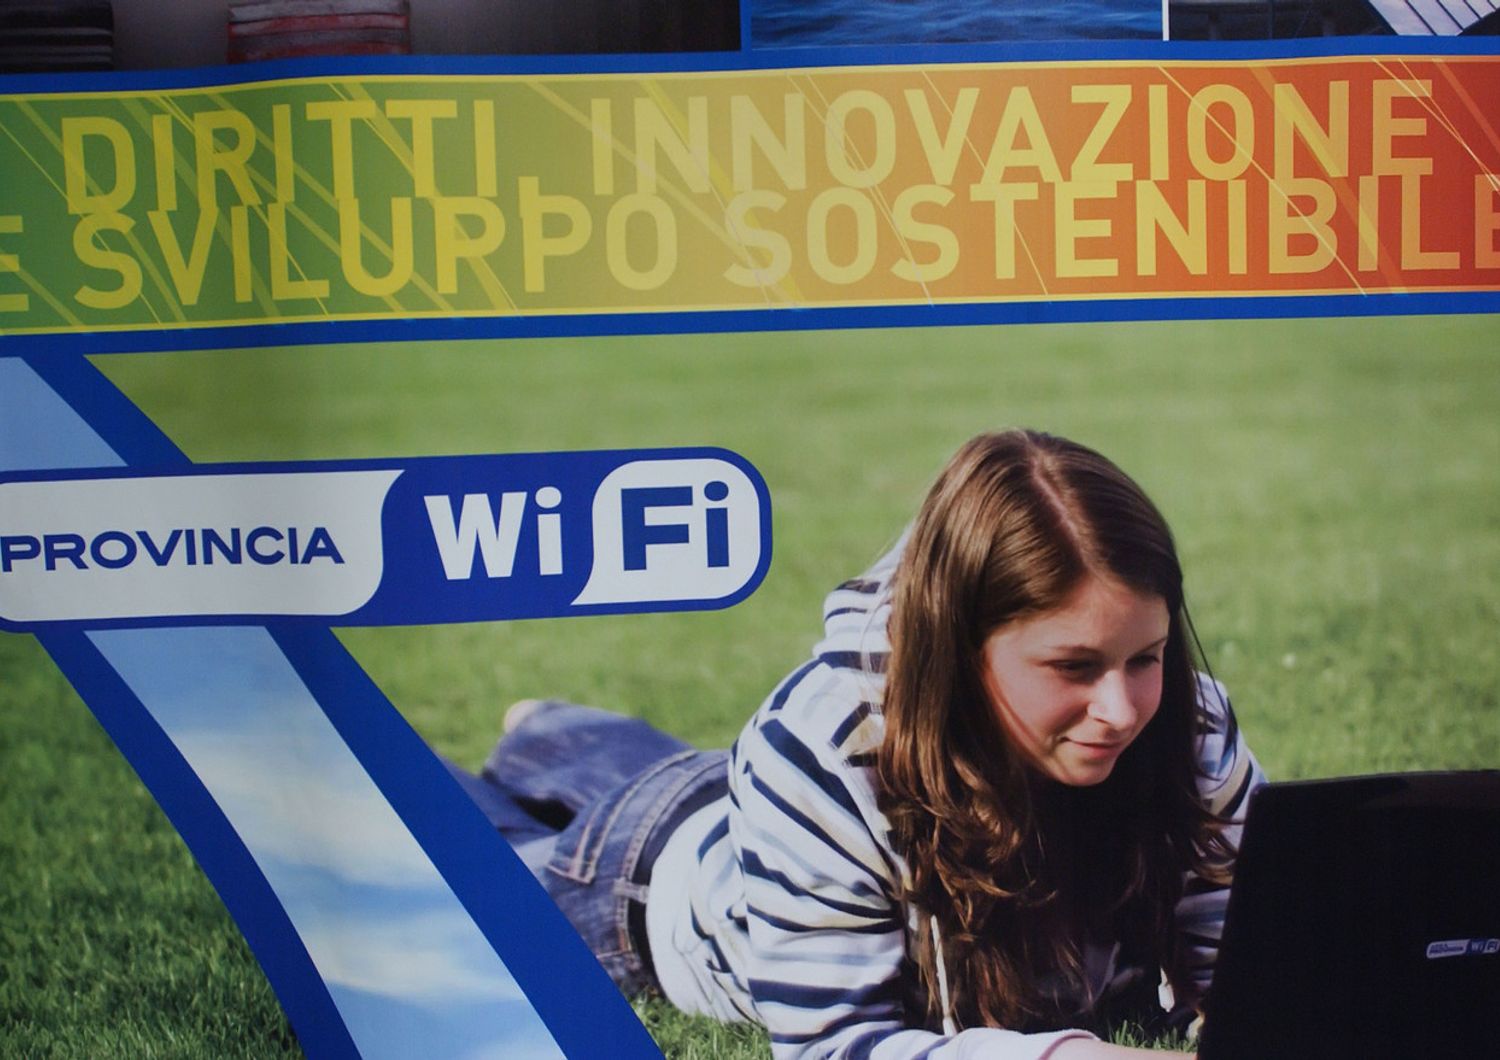 Wifi free, provincia&nbsp;